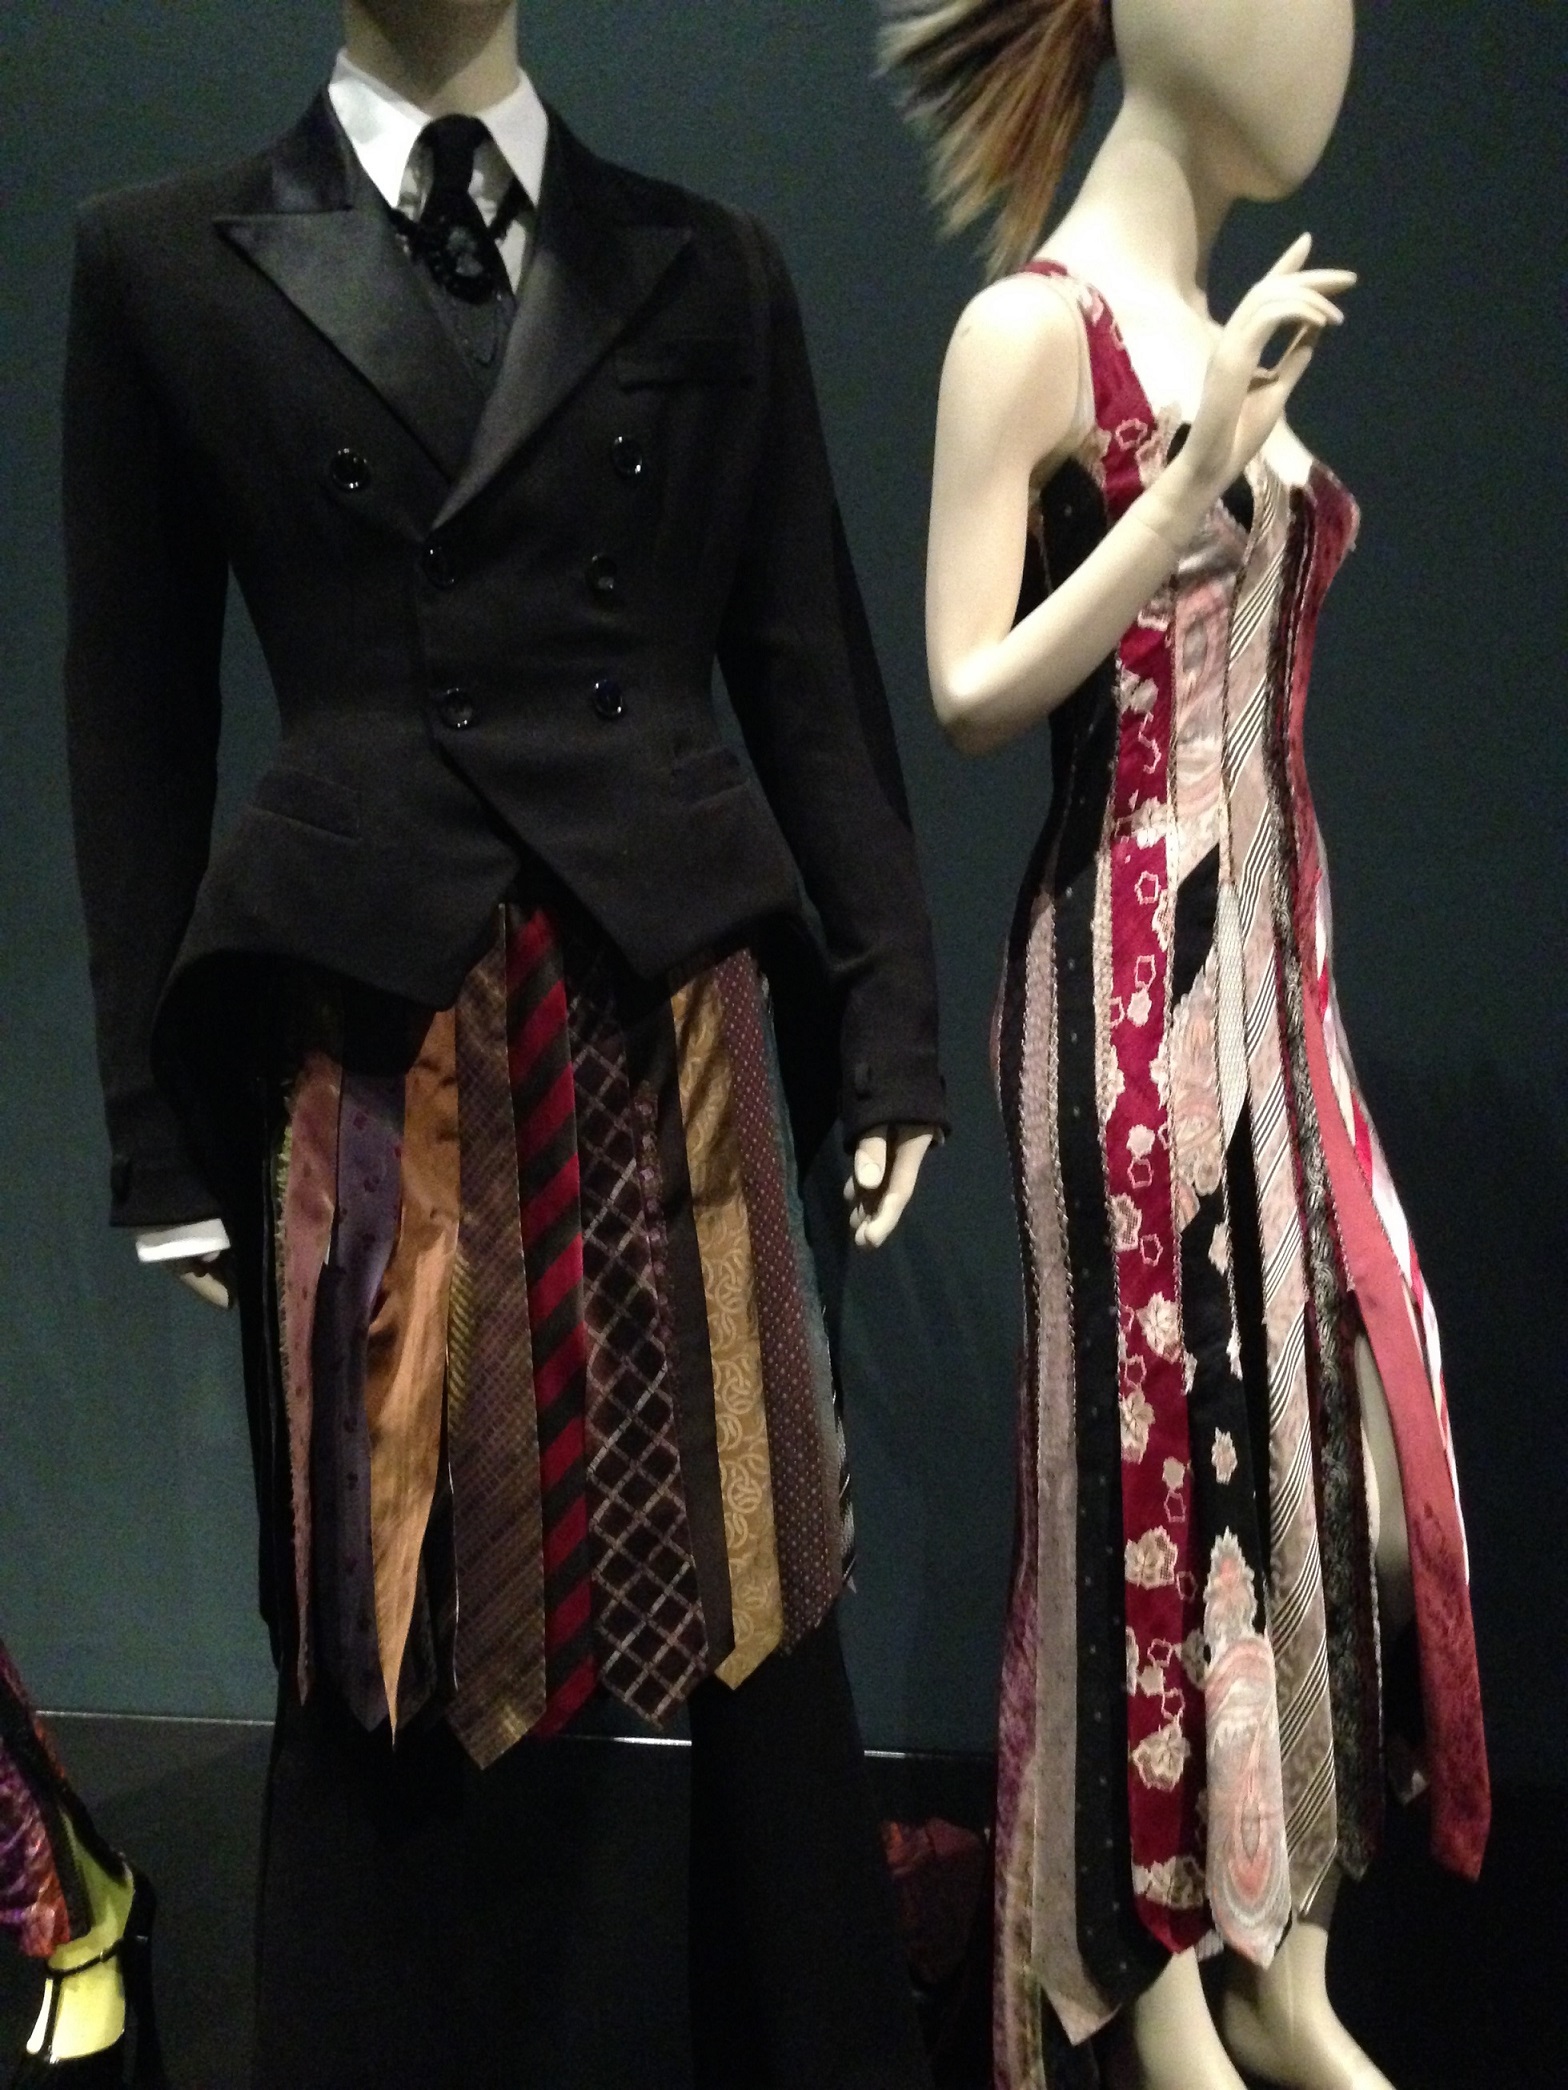 Women's dress and Men's kilt made using ties, Barbican. © Katherine Elliott, 2014